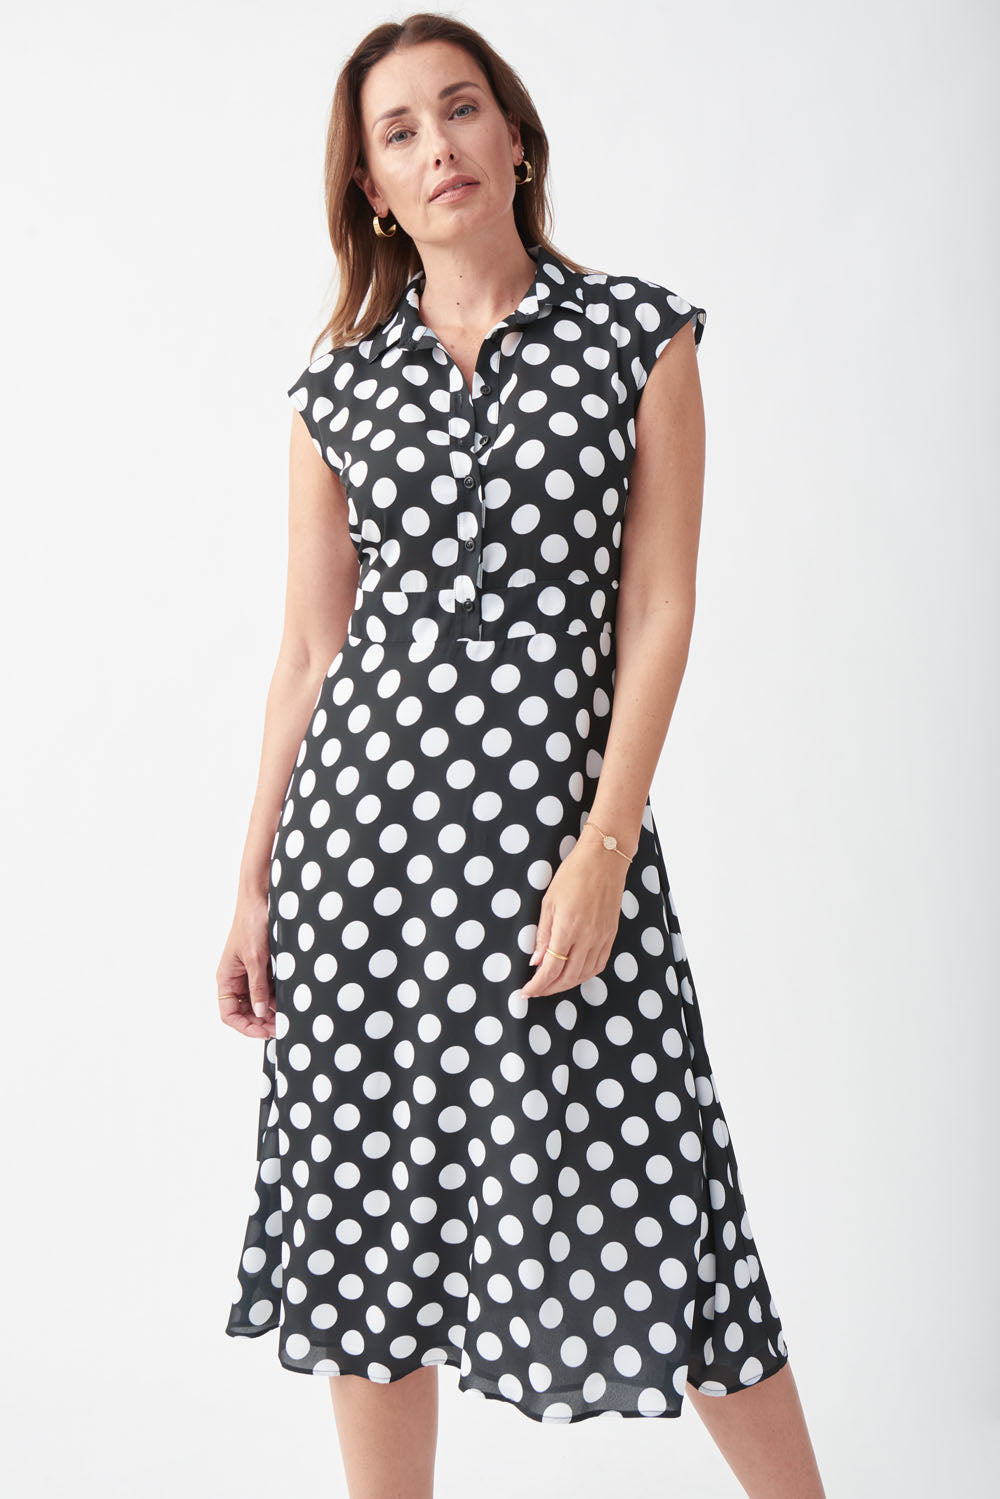 Joseph Ribkoff Black-Vanilla Fit & Flare Dress Style 221361